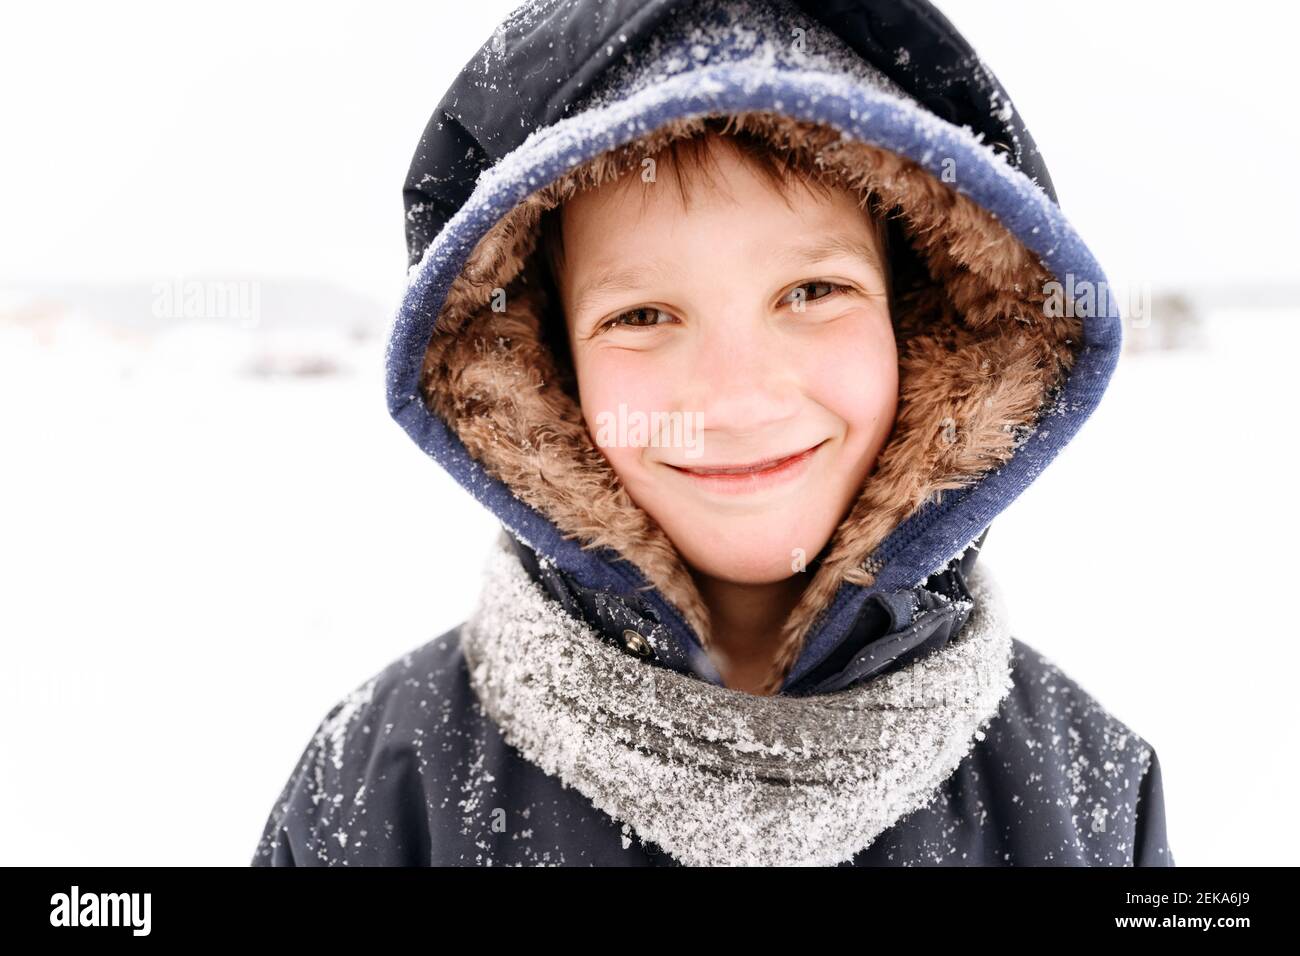 Close-up portrait of smiling boy wearing warm clothing Stock Photo